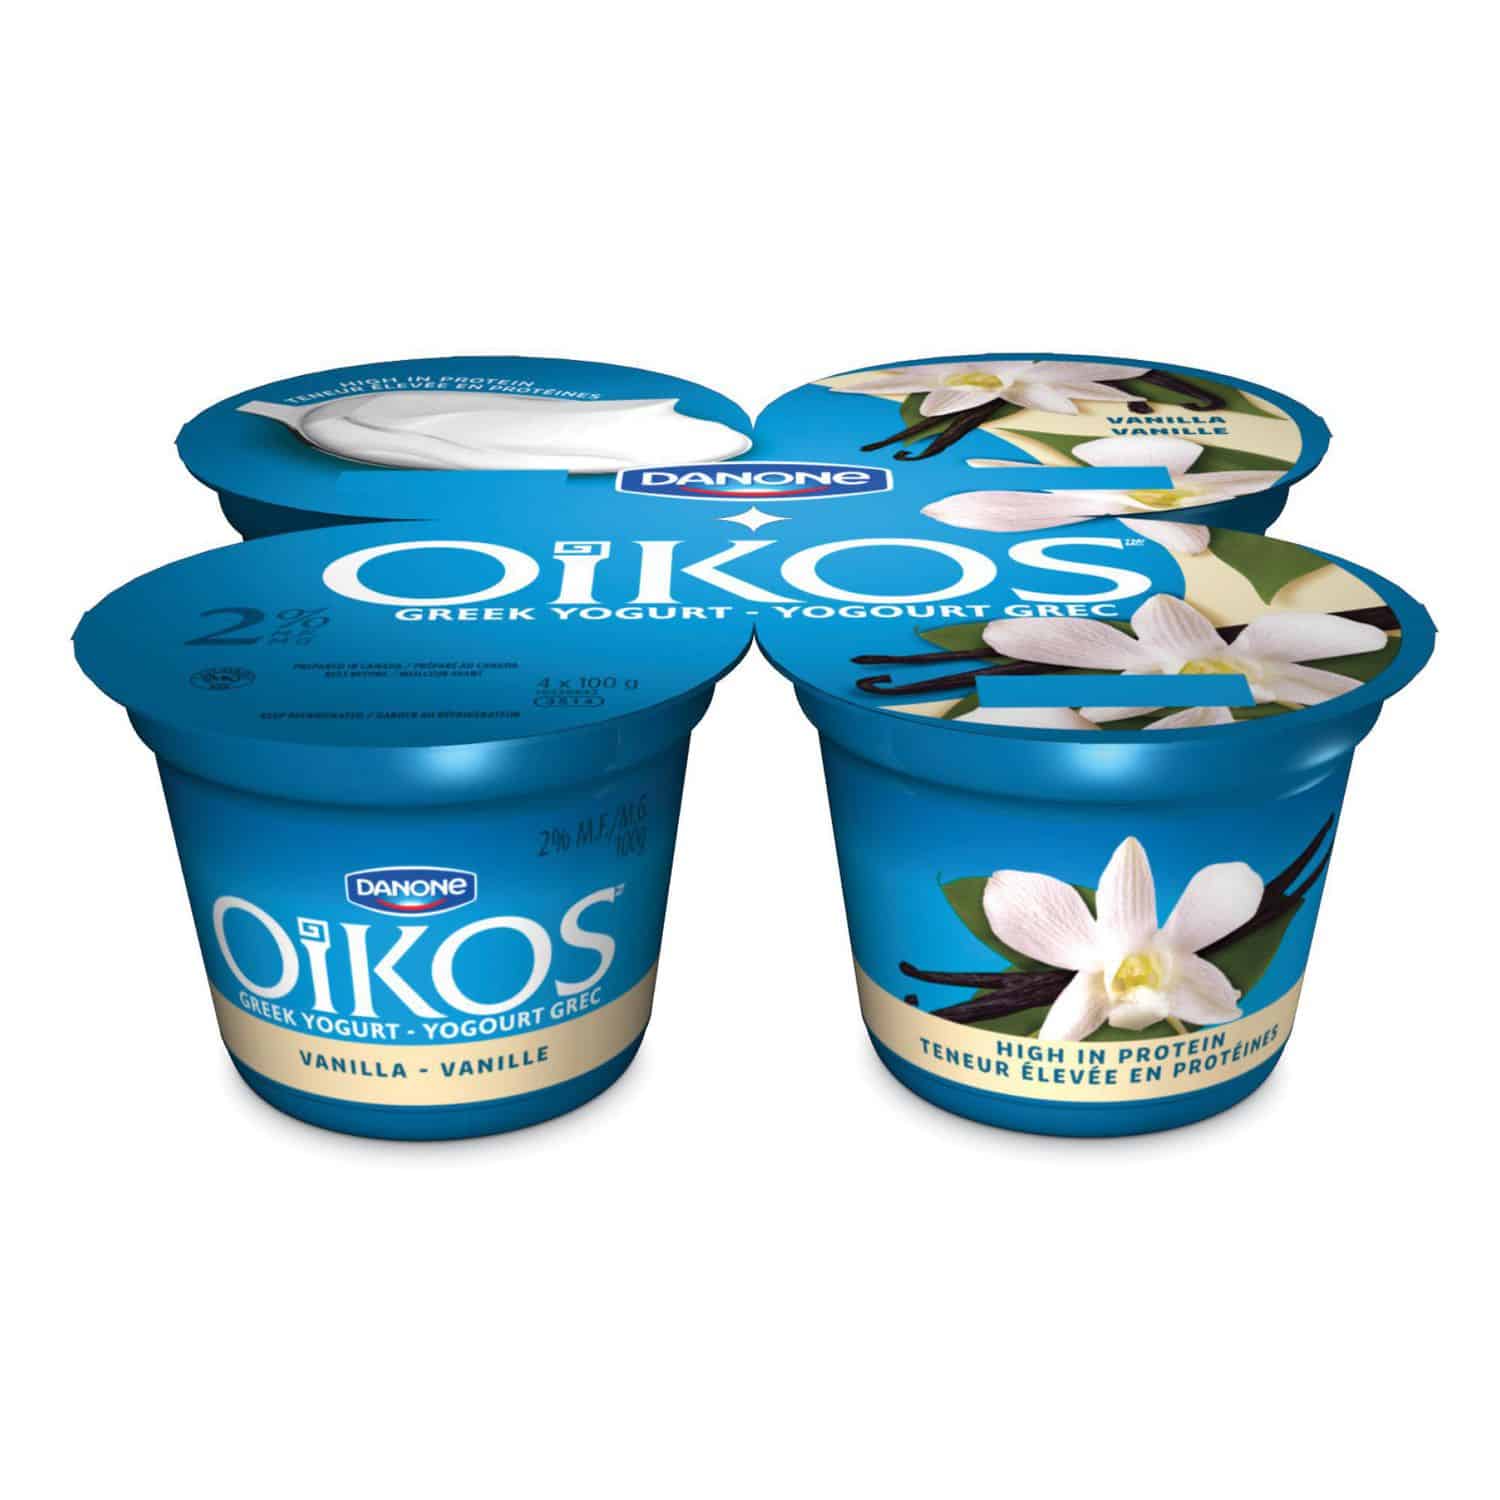 Does Oikos Greek Yogurt Have Probiotics